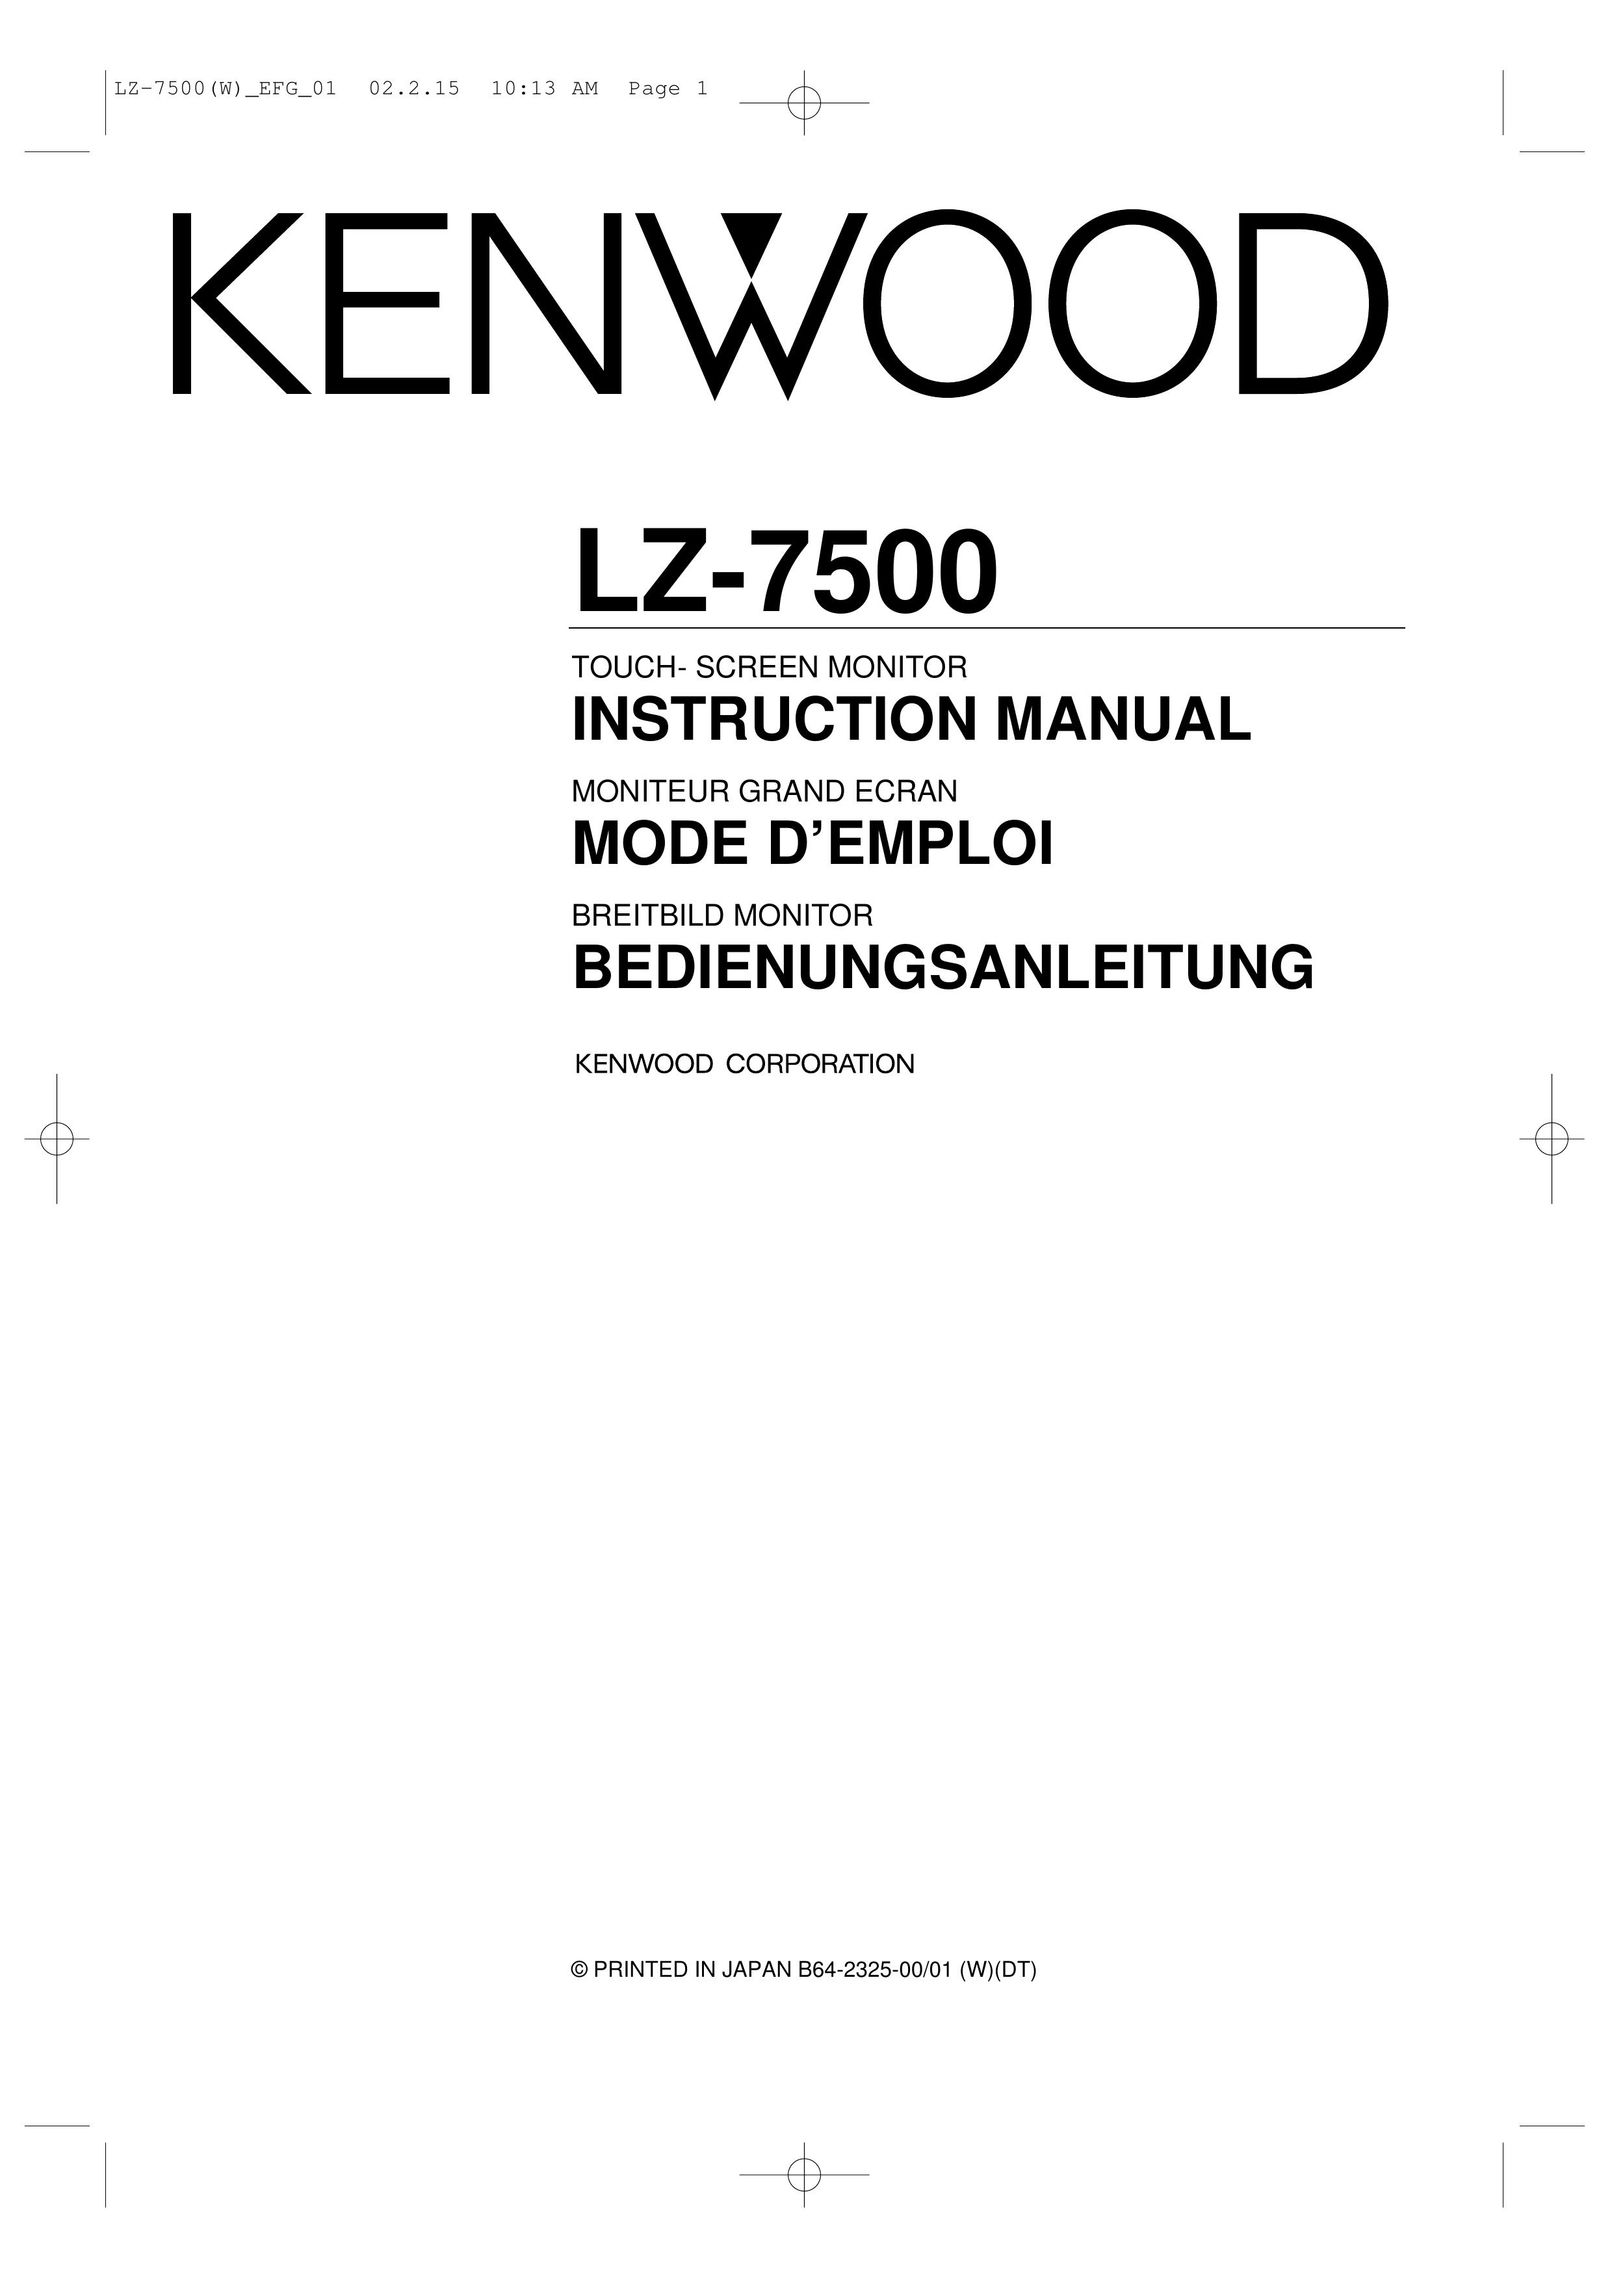 Kenwood LZ-7500 Computer Monitor User Manual